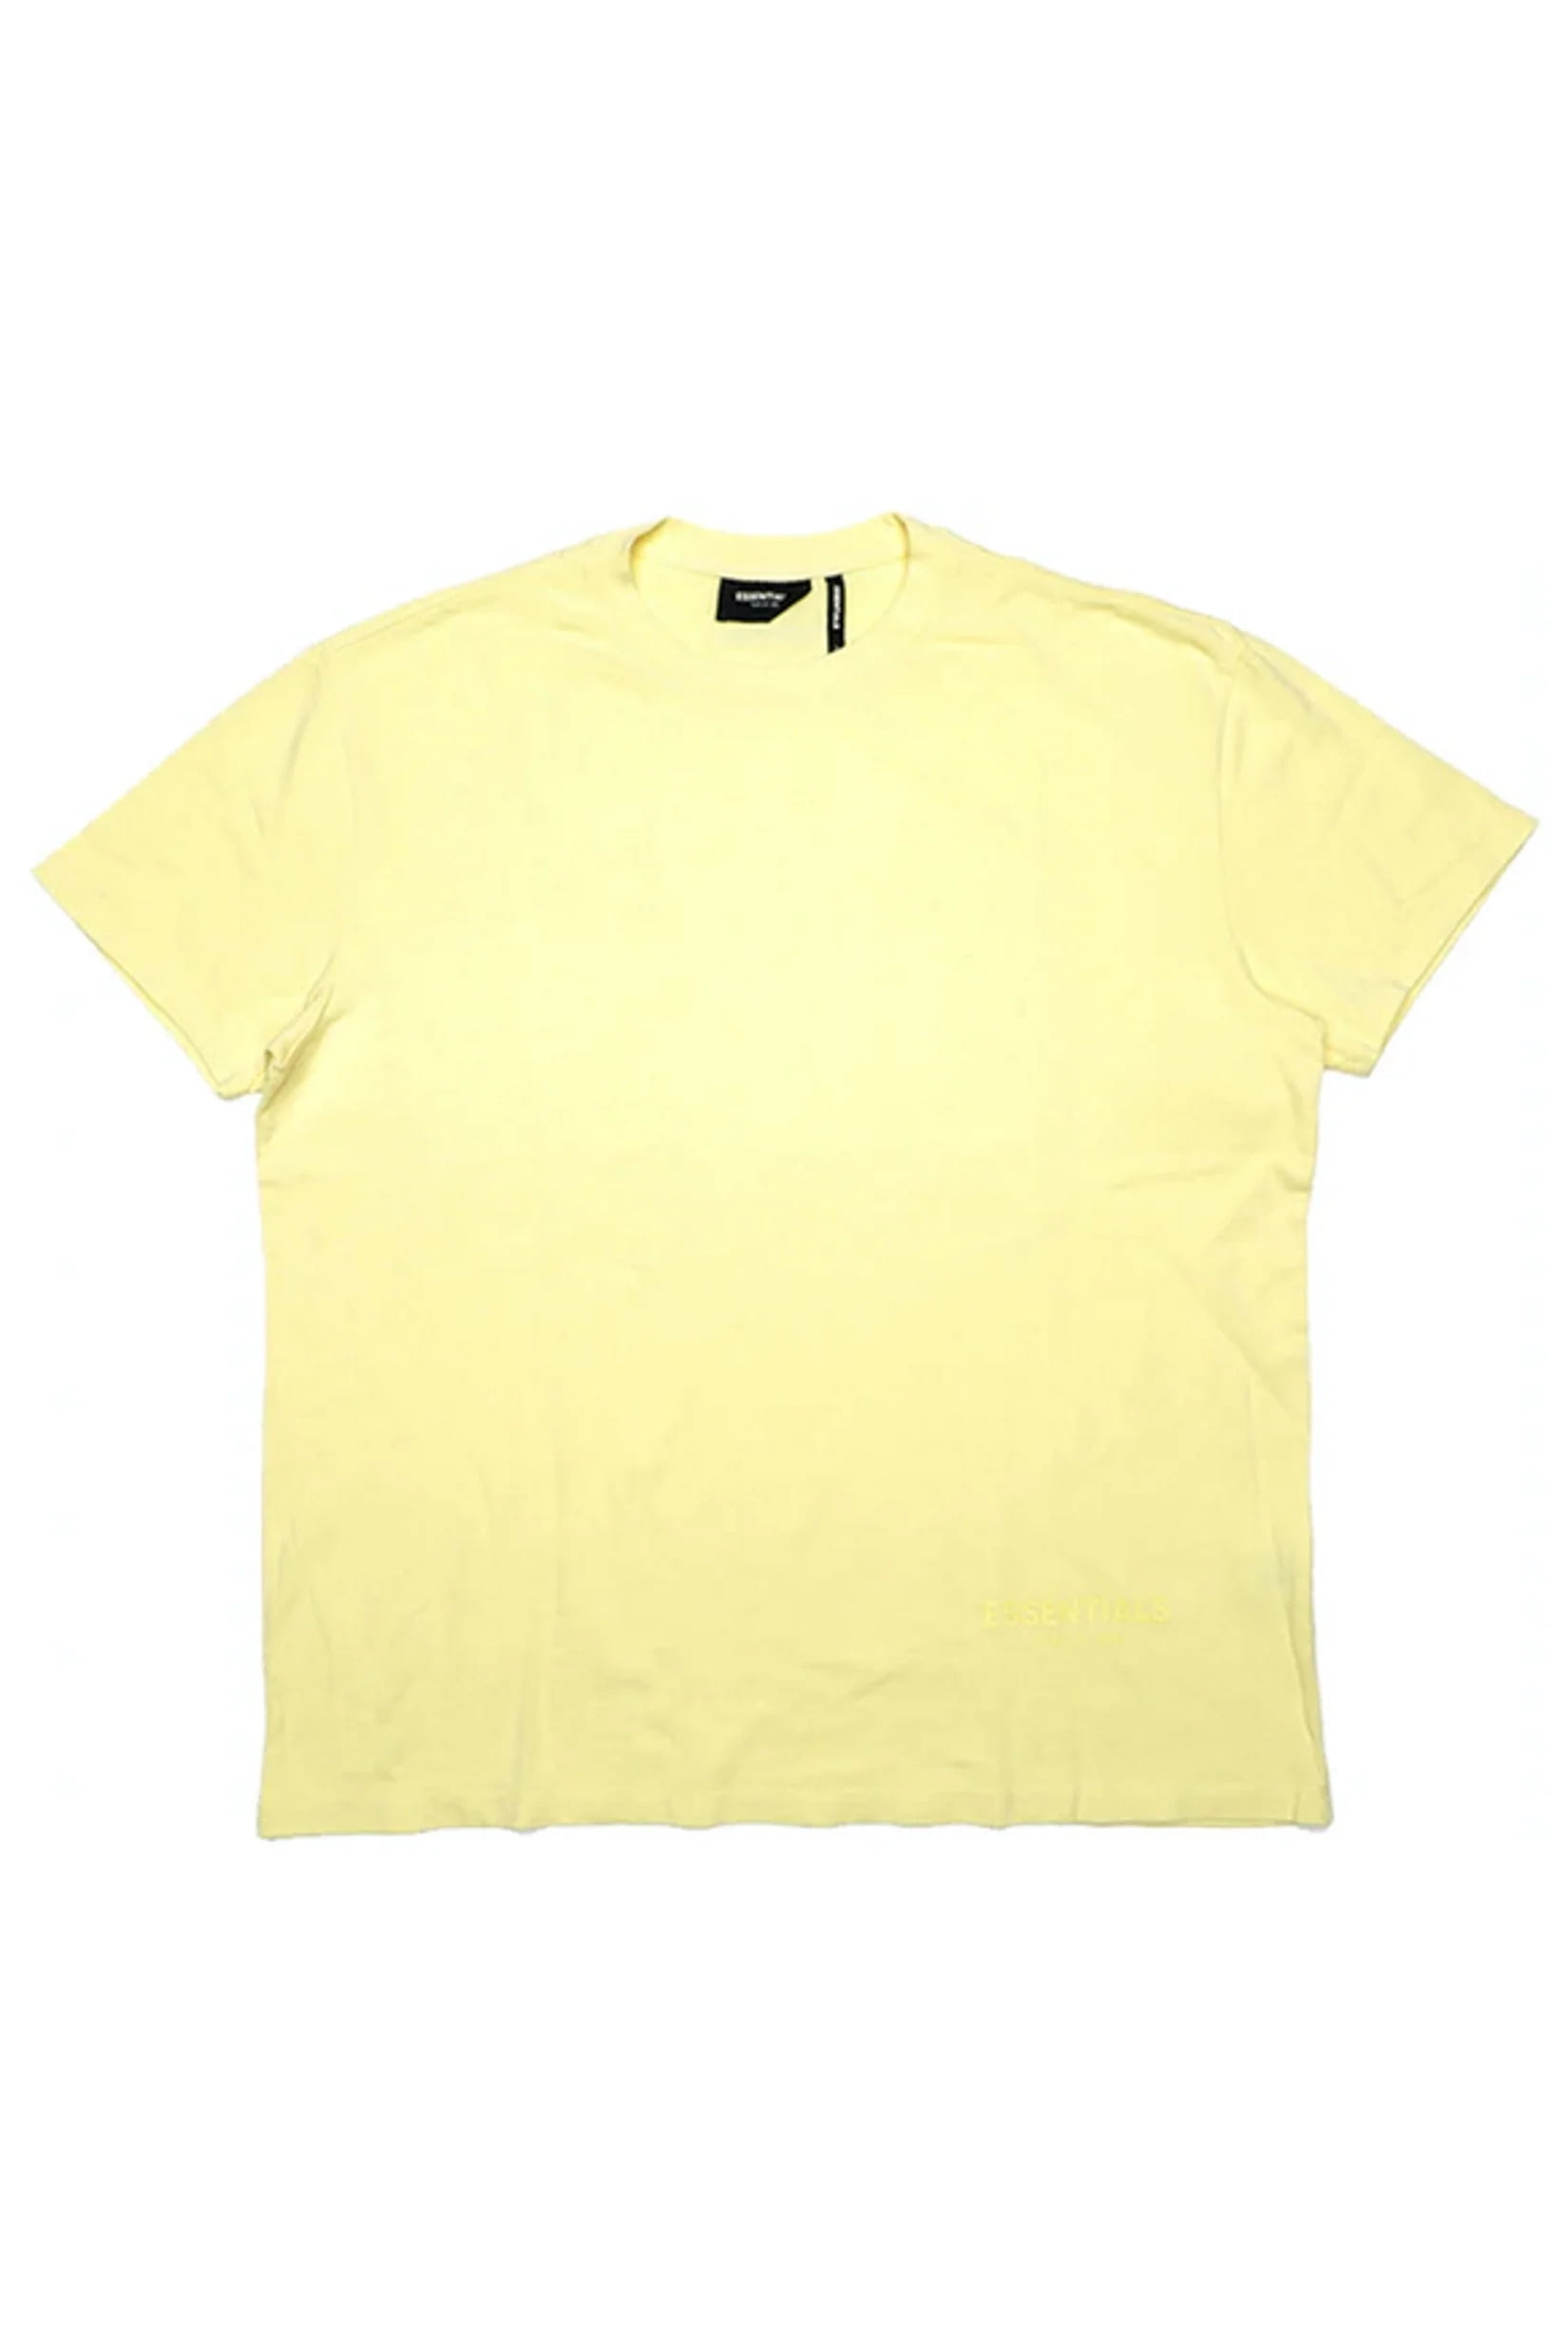 FEAR OF GOD ESSENTIALS Lemonade Boxy T-Shirt Yellow - Walmart.com